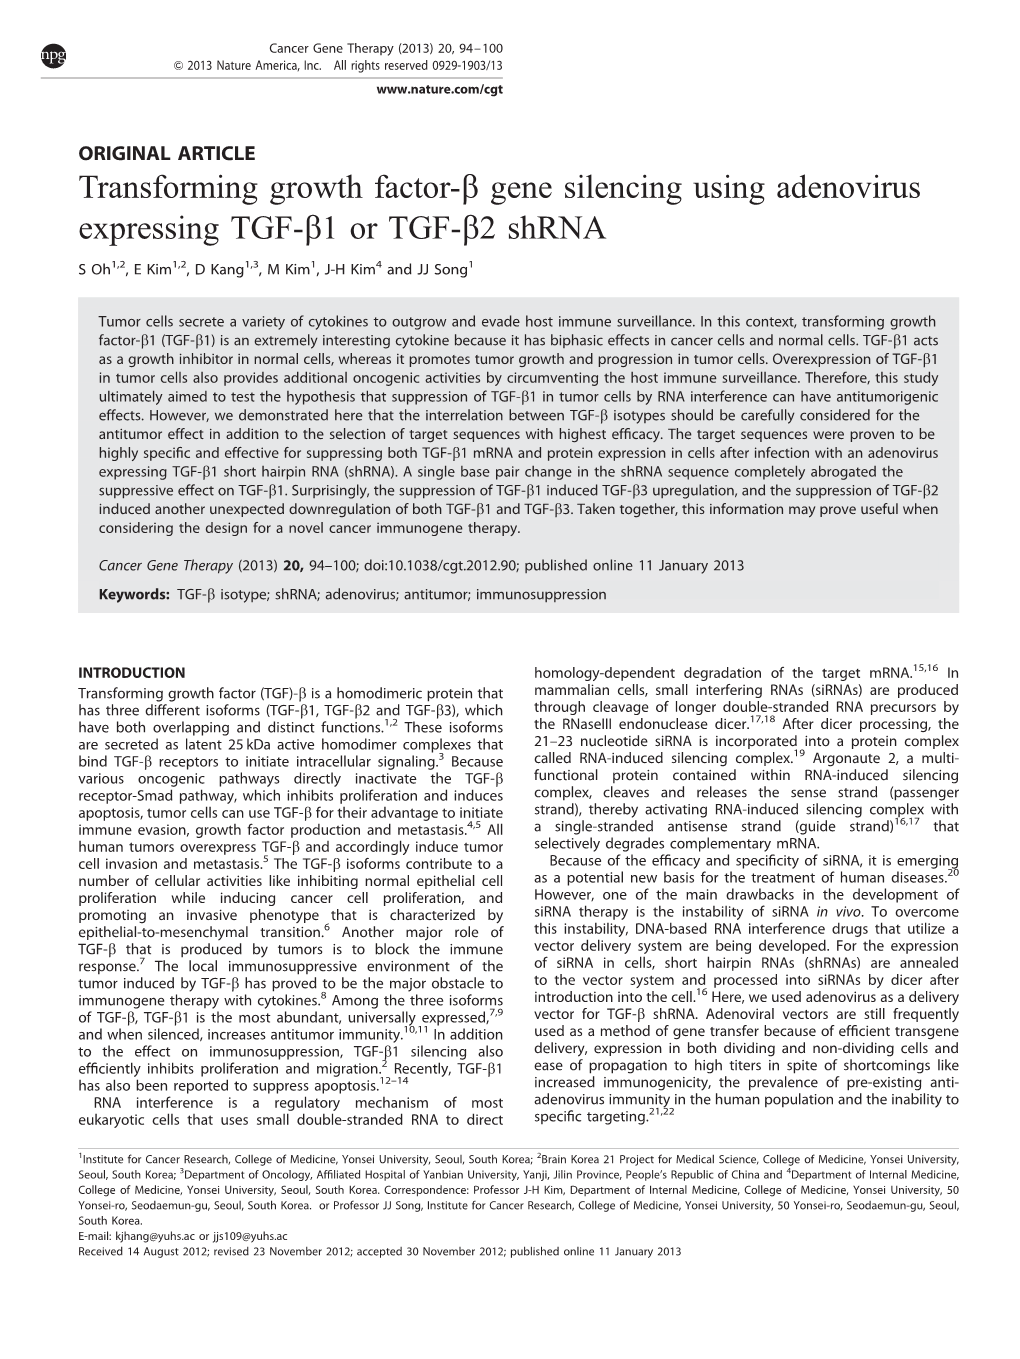 Transforming Growth Factor-&Beta; Gene Silencing Using Adenovirus Expressing TGF-&Beta;1 Or TGF-&Beta;2 Shrna